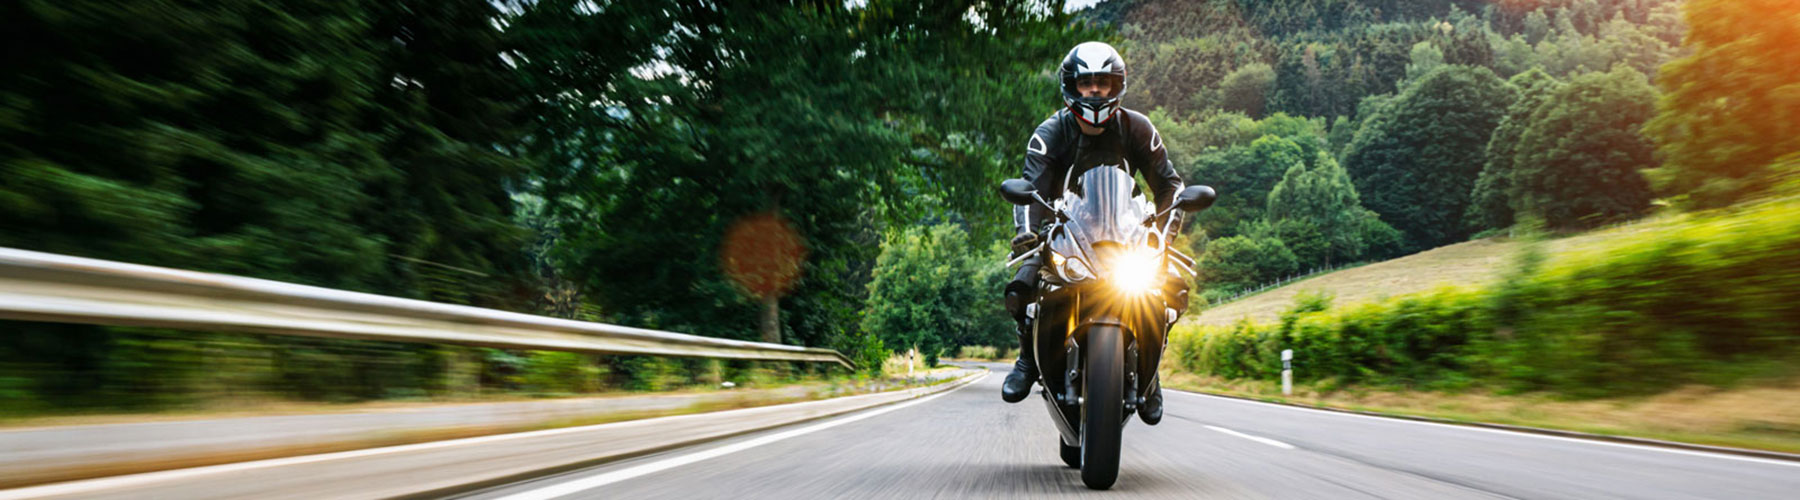 Standard sport motorcycle speeding down scenic road